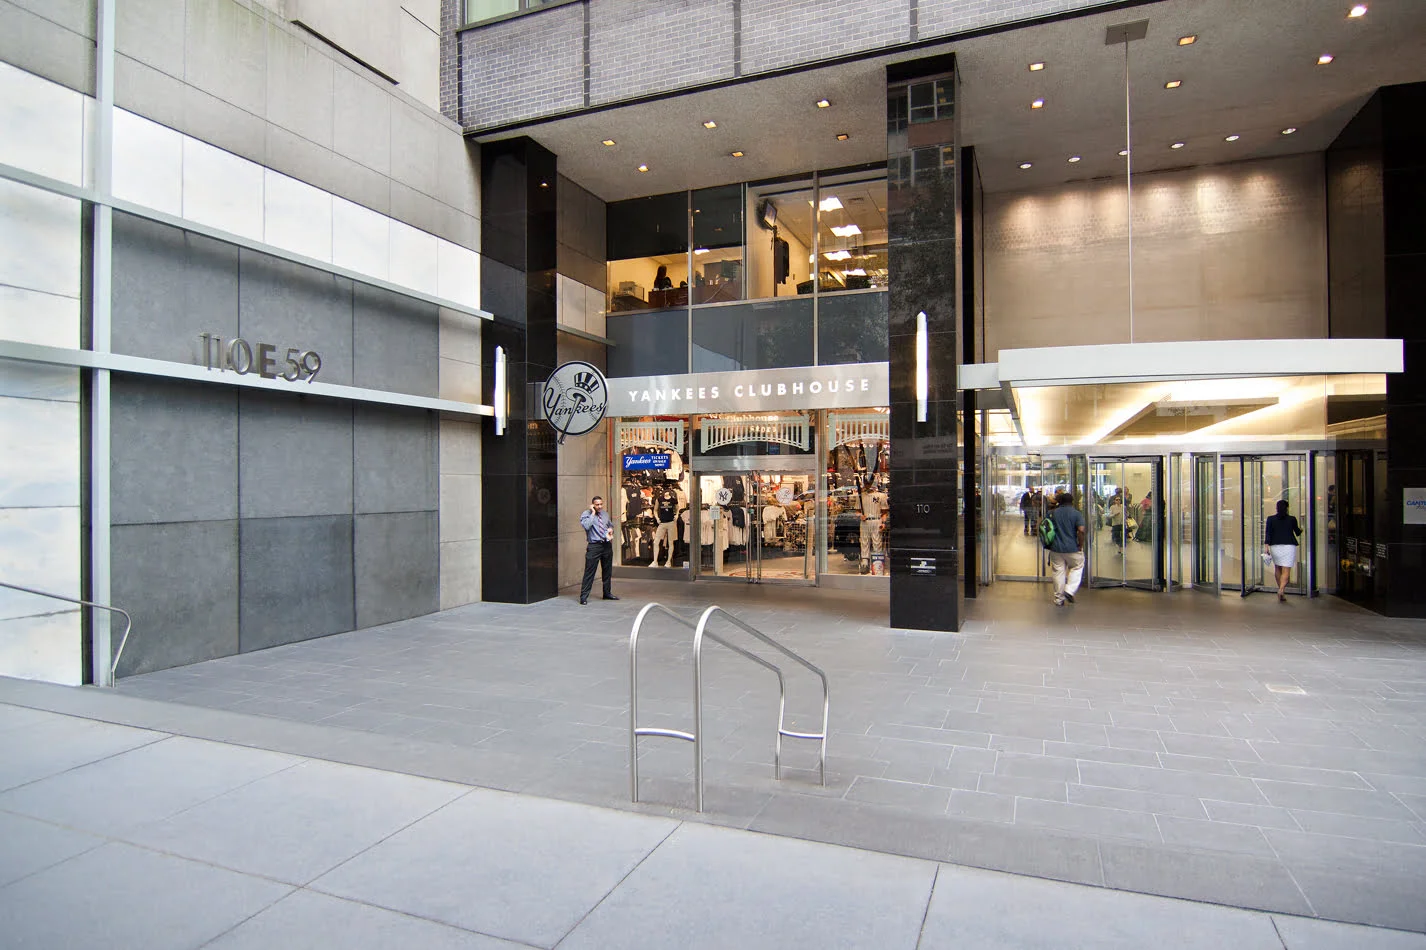 110 East 59th Street retail space between Park Avenue and Lexington Avenue